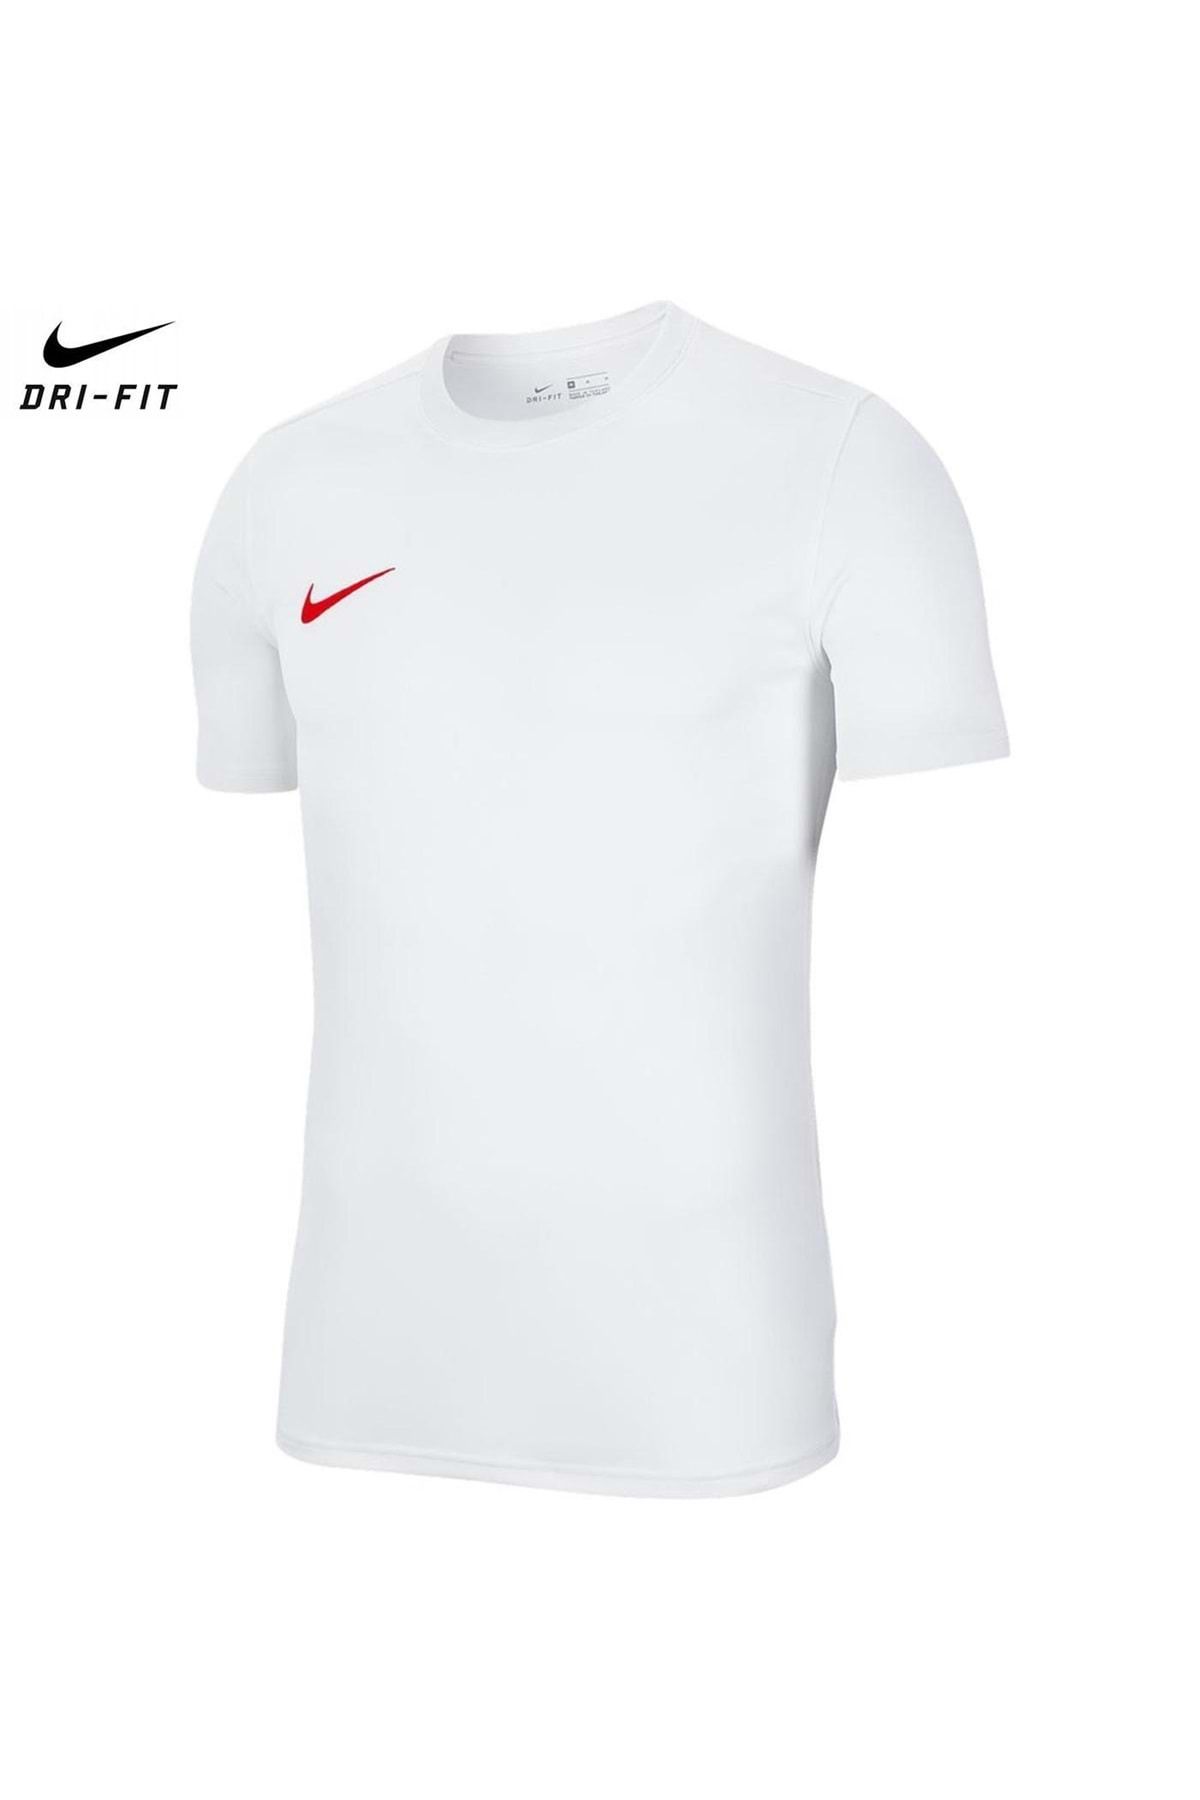 Nike Bv6708-103 Dri-fit Park Vıı Jsy Ss Tişört Erkek Futbol Forması Beyaz